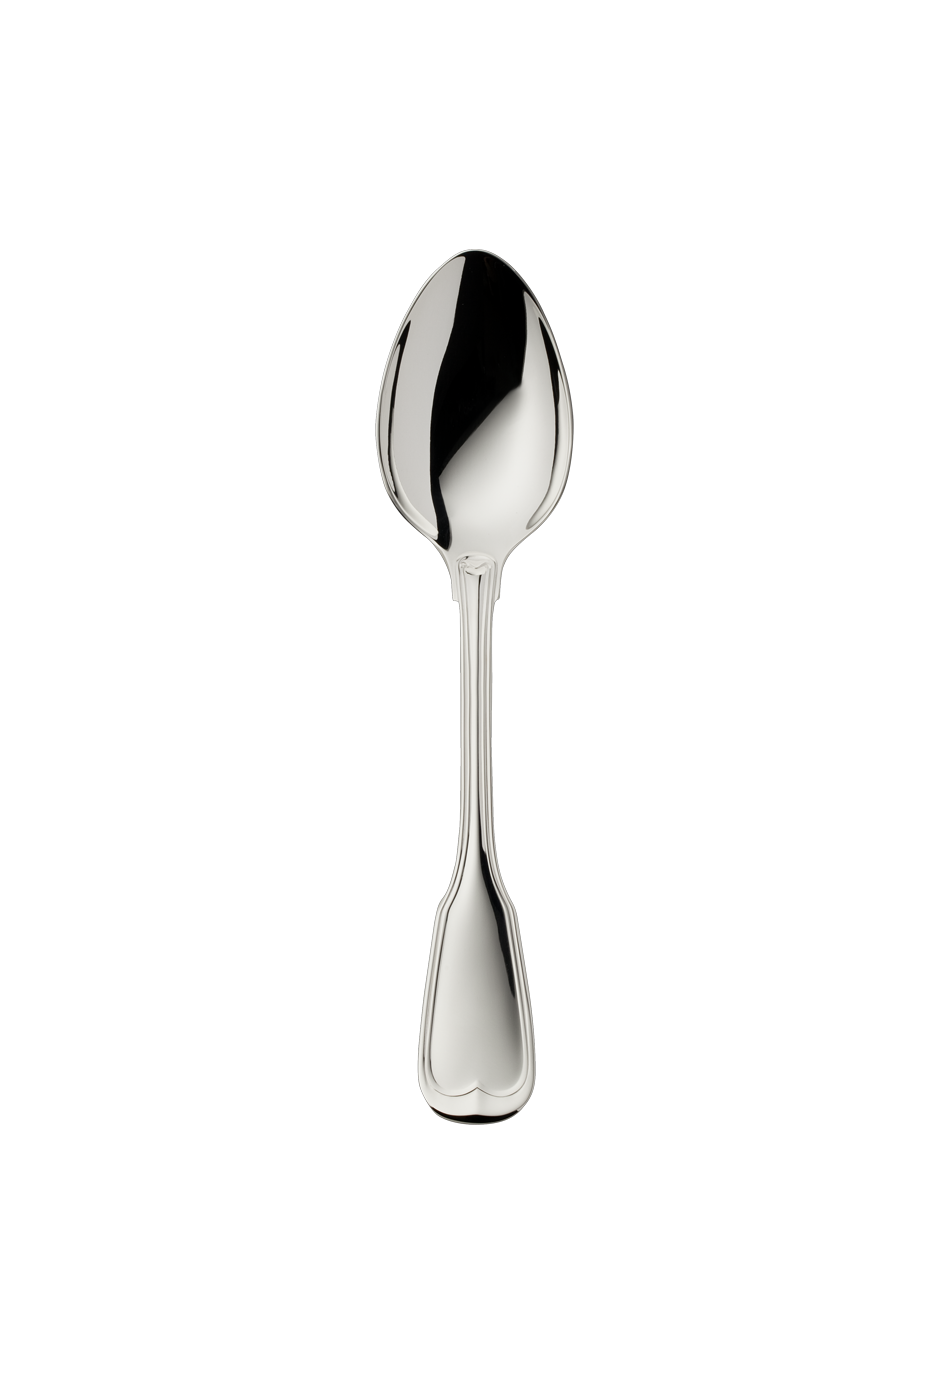 Alt-Faden Children's Spoon (150g massive silverplated)